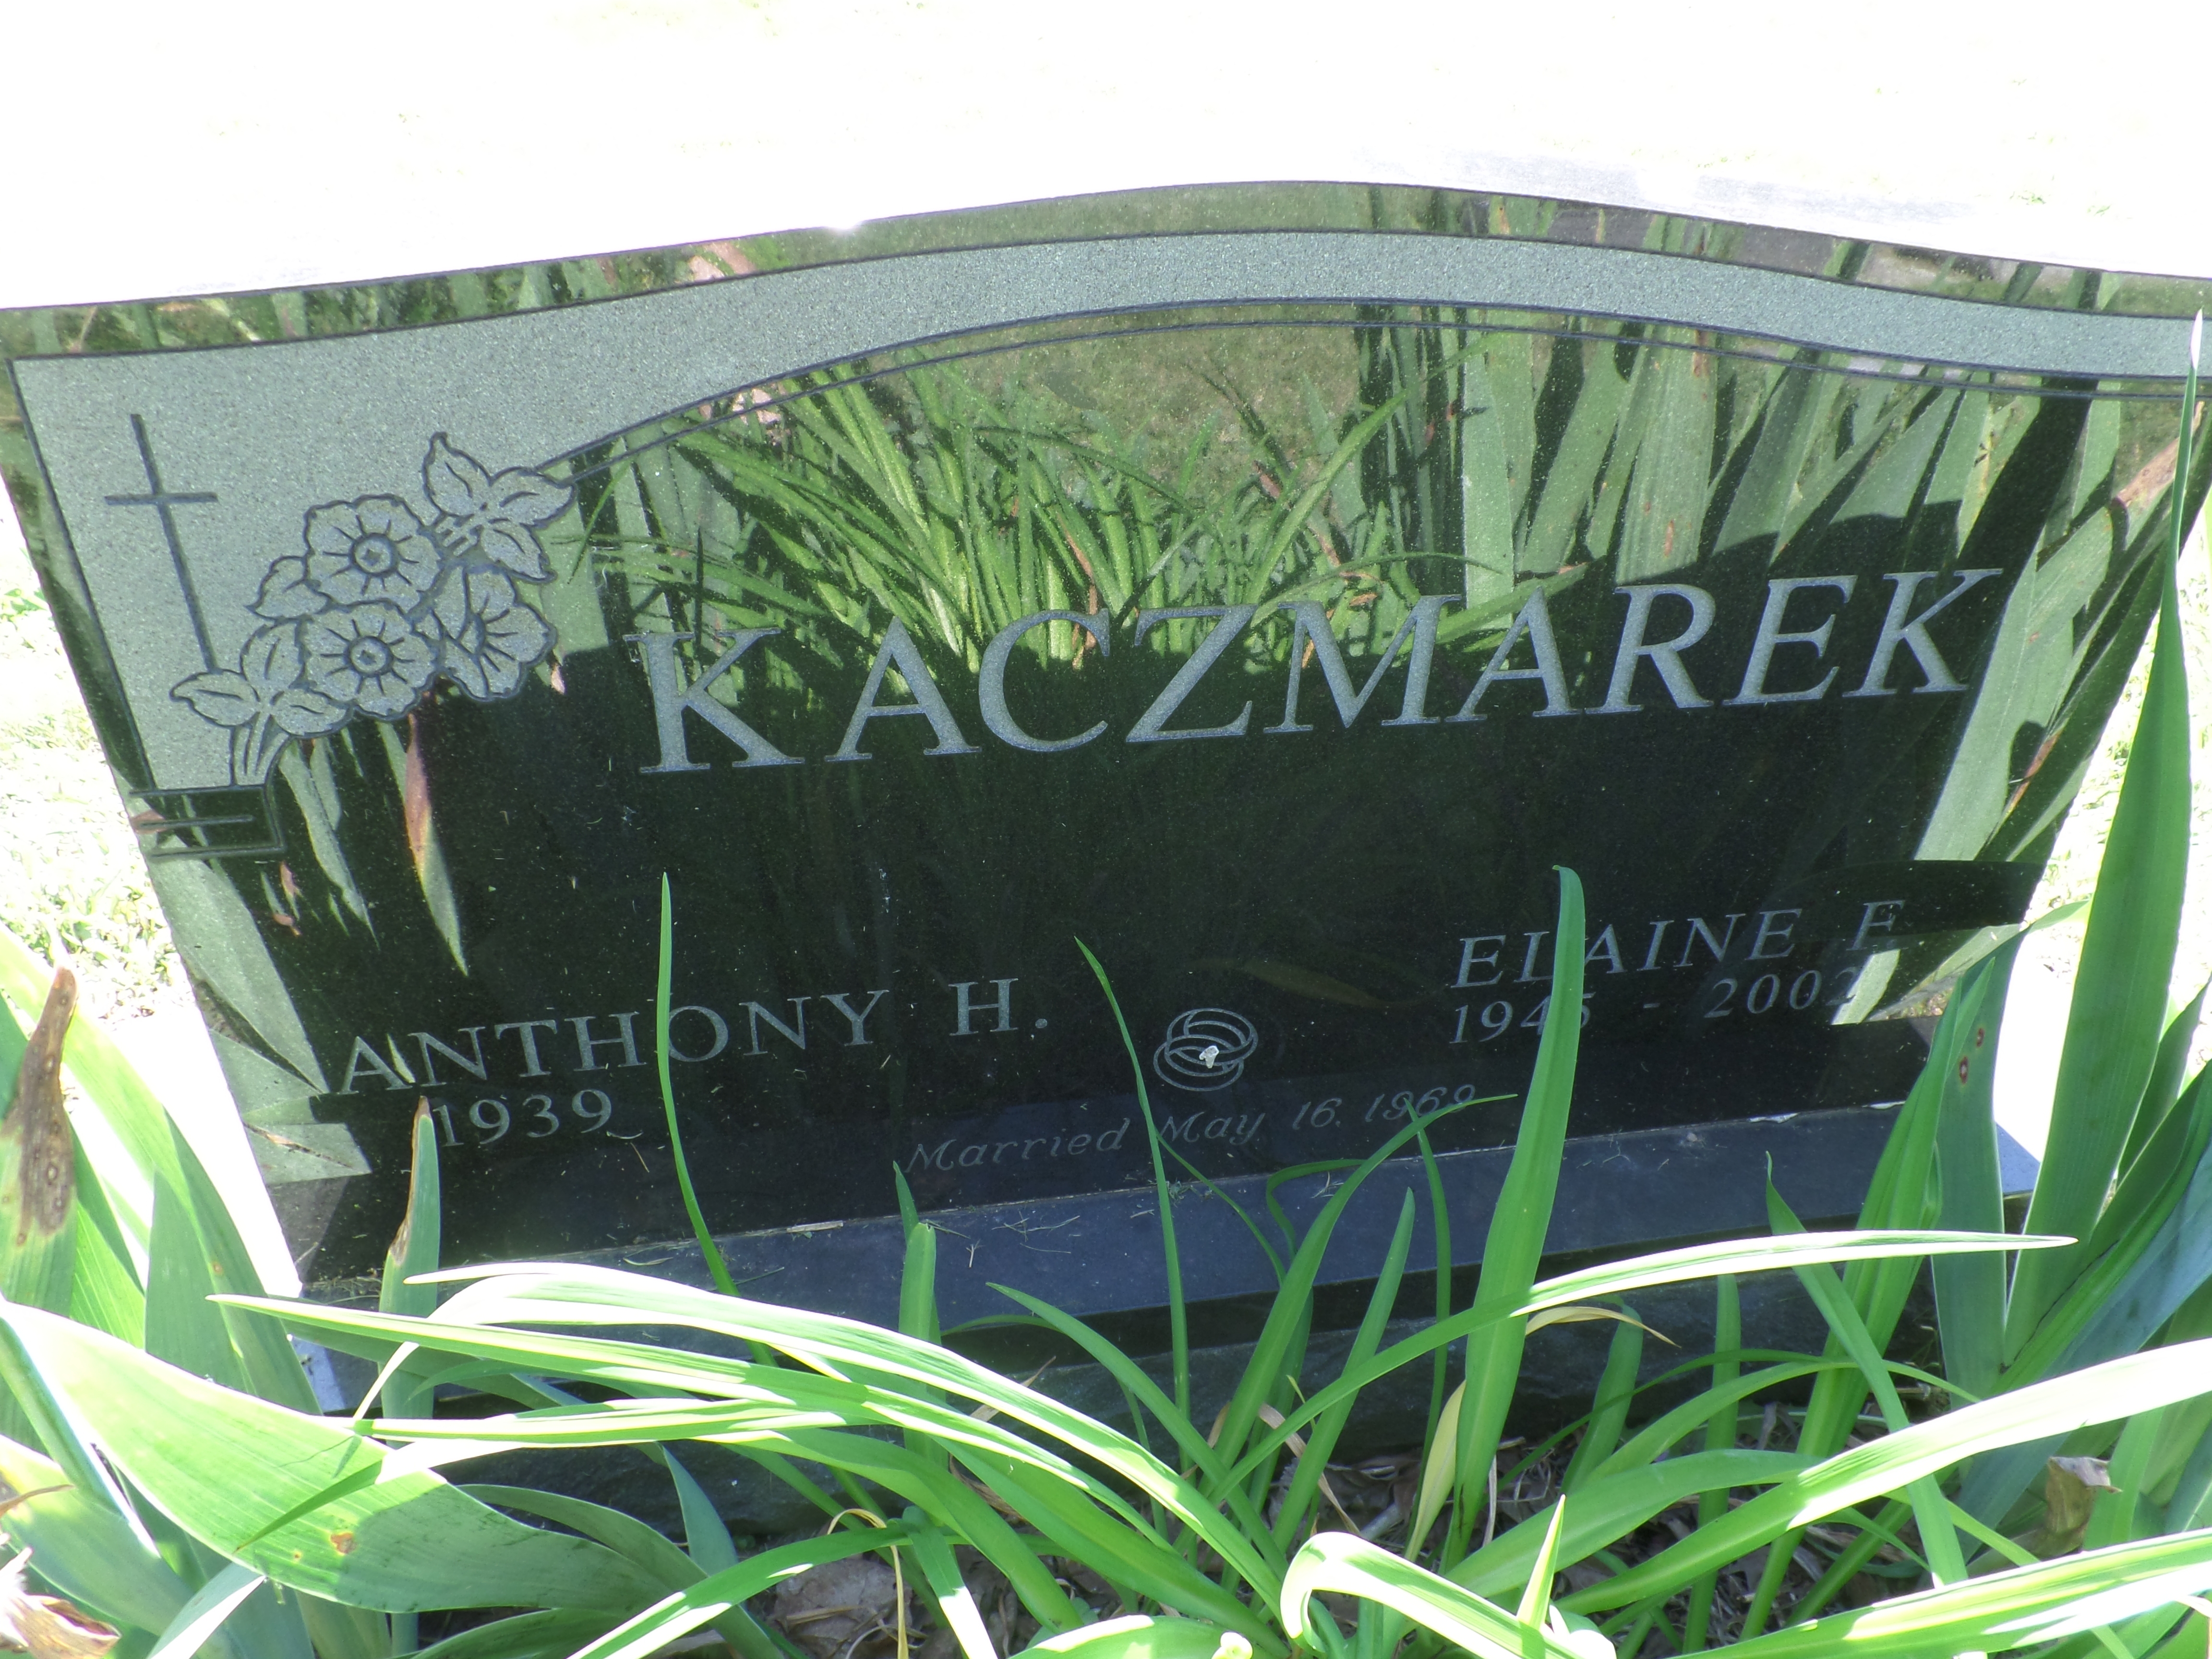 Elaine F Kaczmarek gravesite